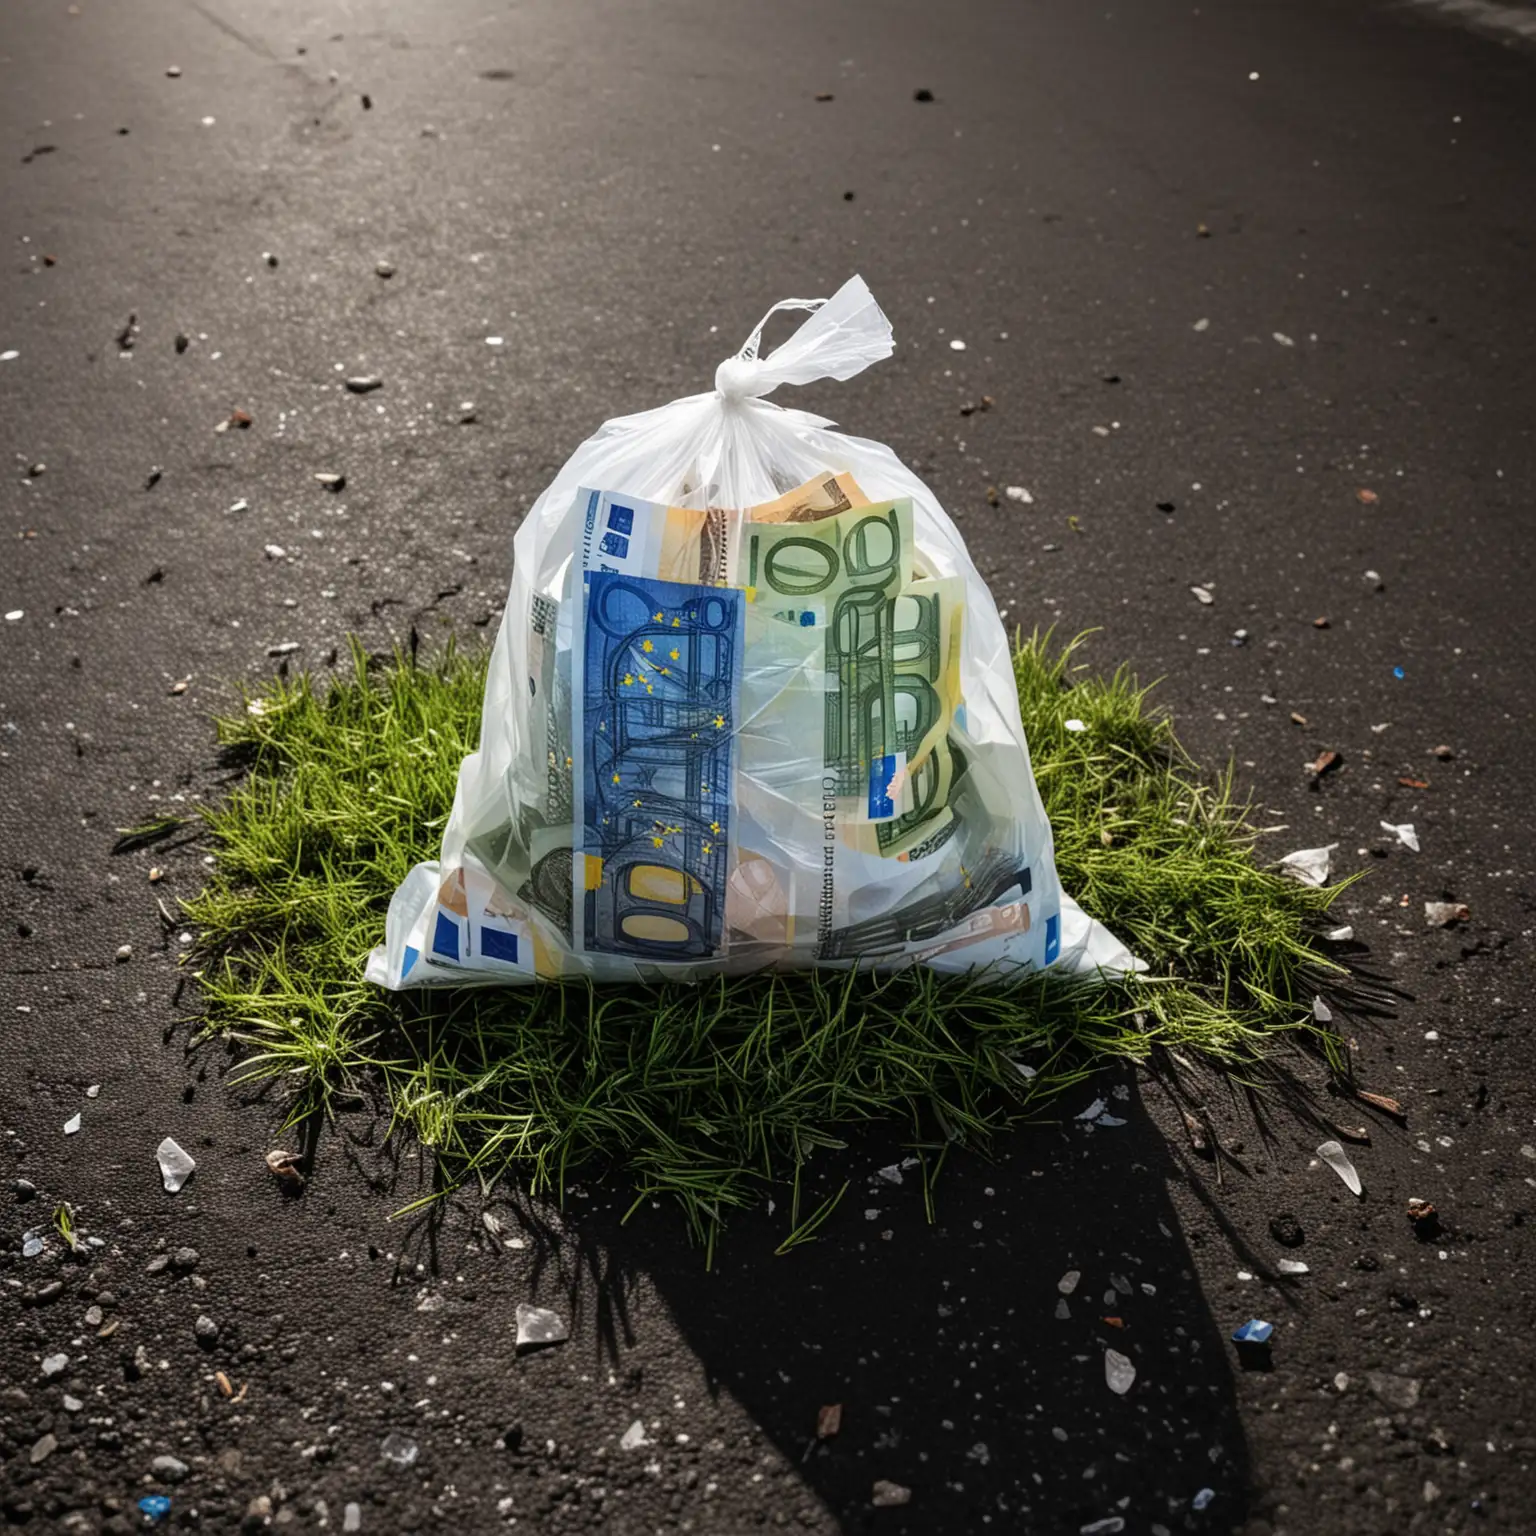 Euro Bills in Plastic Bag on Nighttime Asphalt Ground with Grass